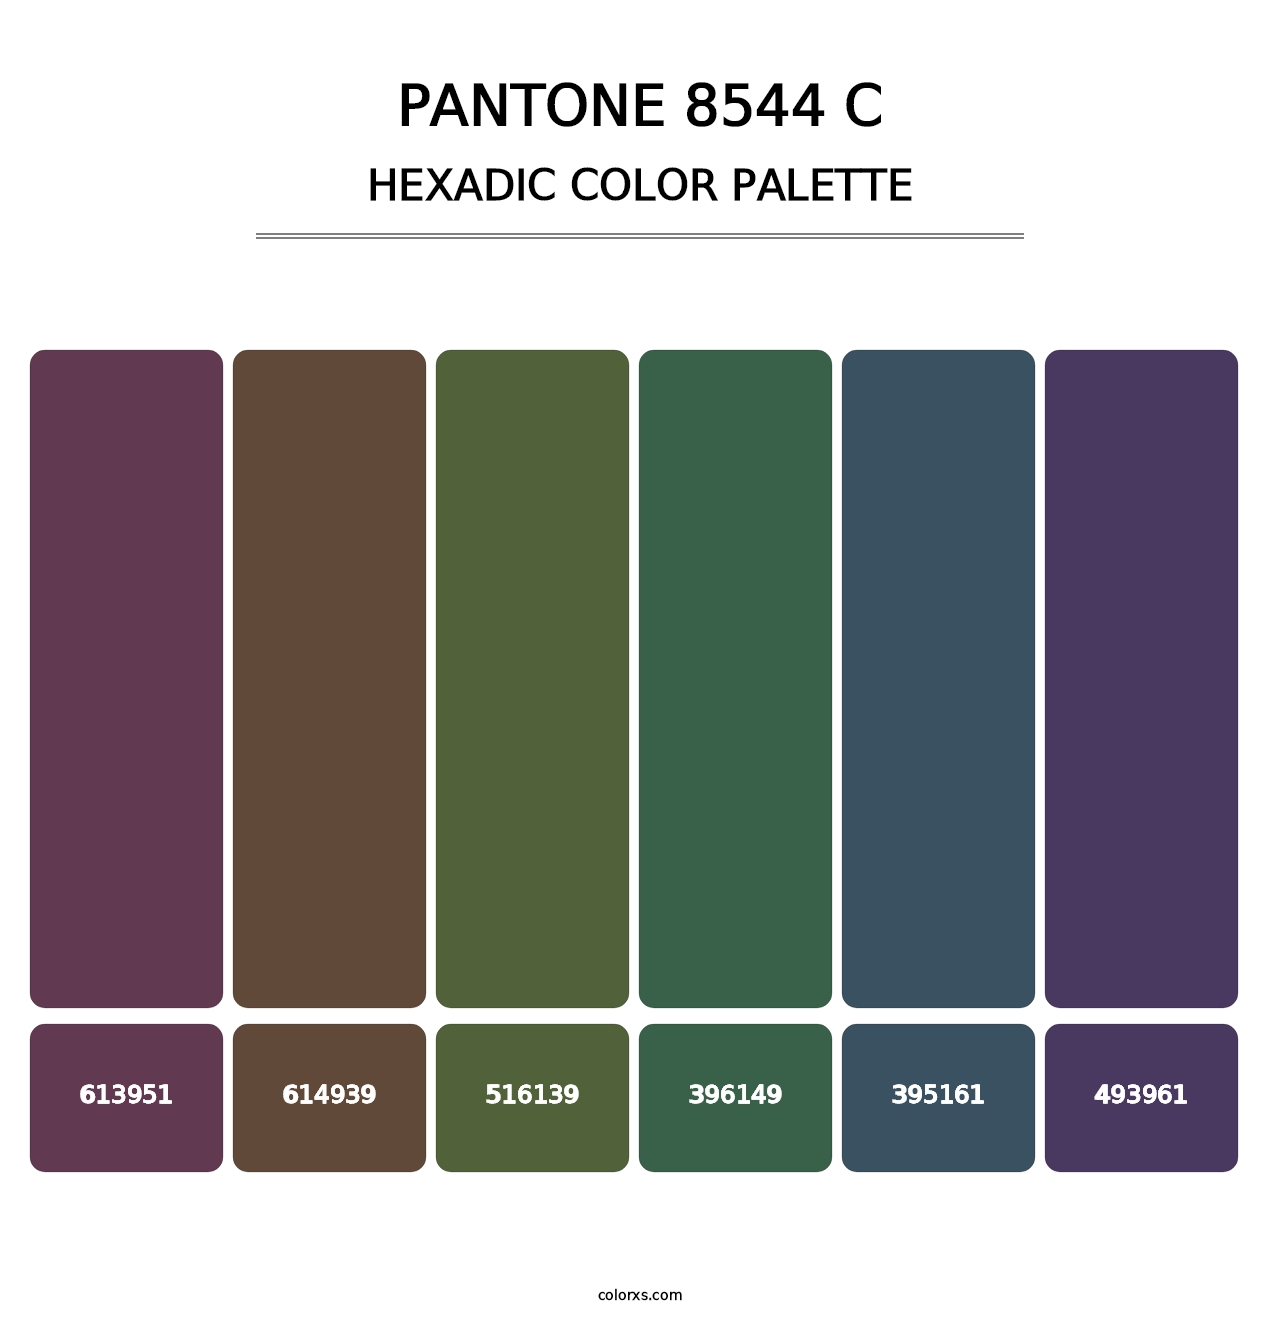 PANTONE 8544 C - Hexadic Color Palette